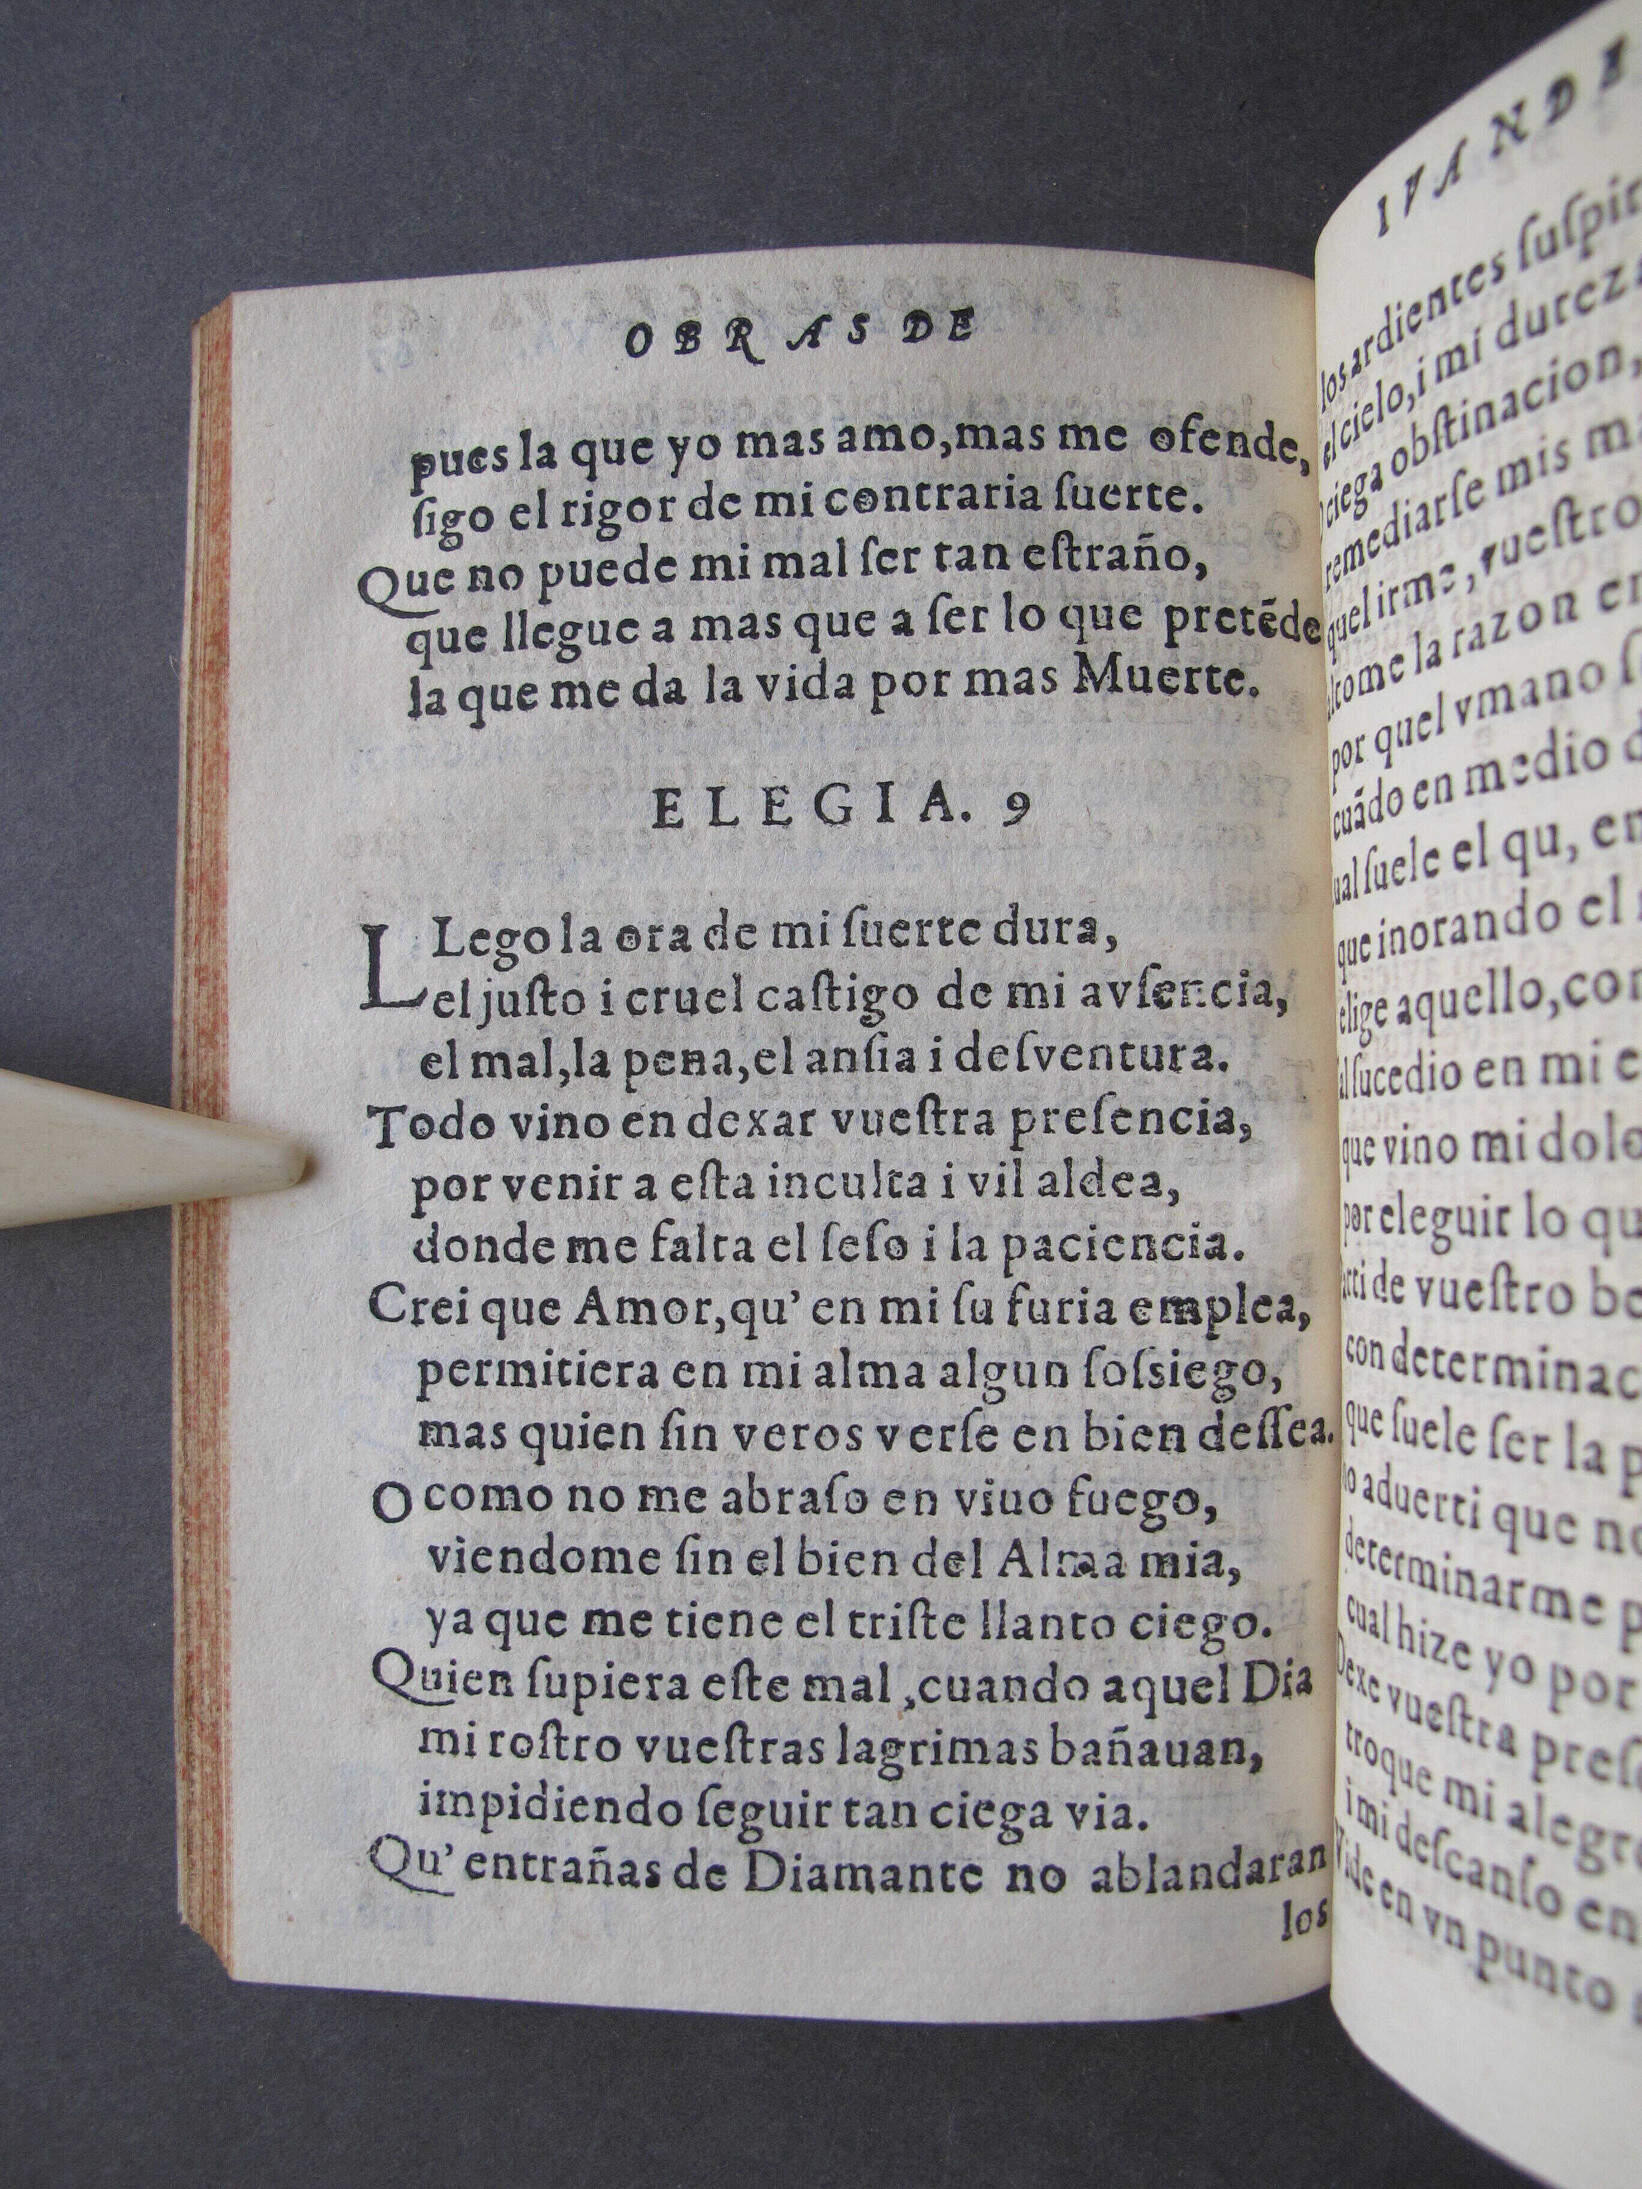 Folio I3 verso